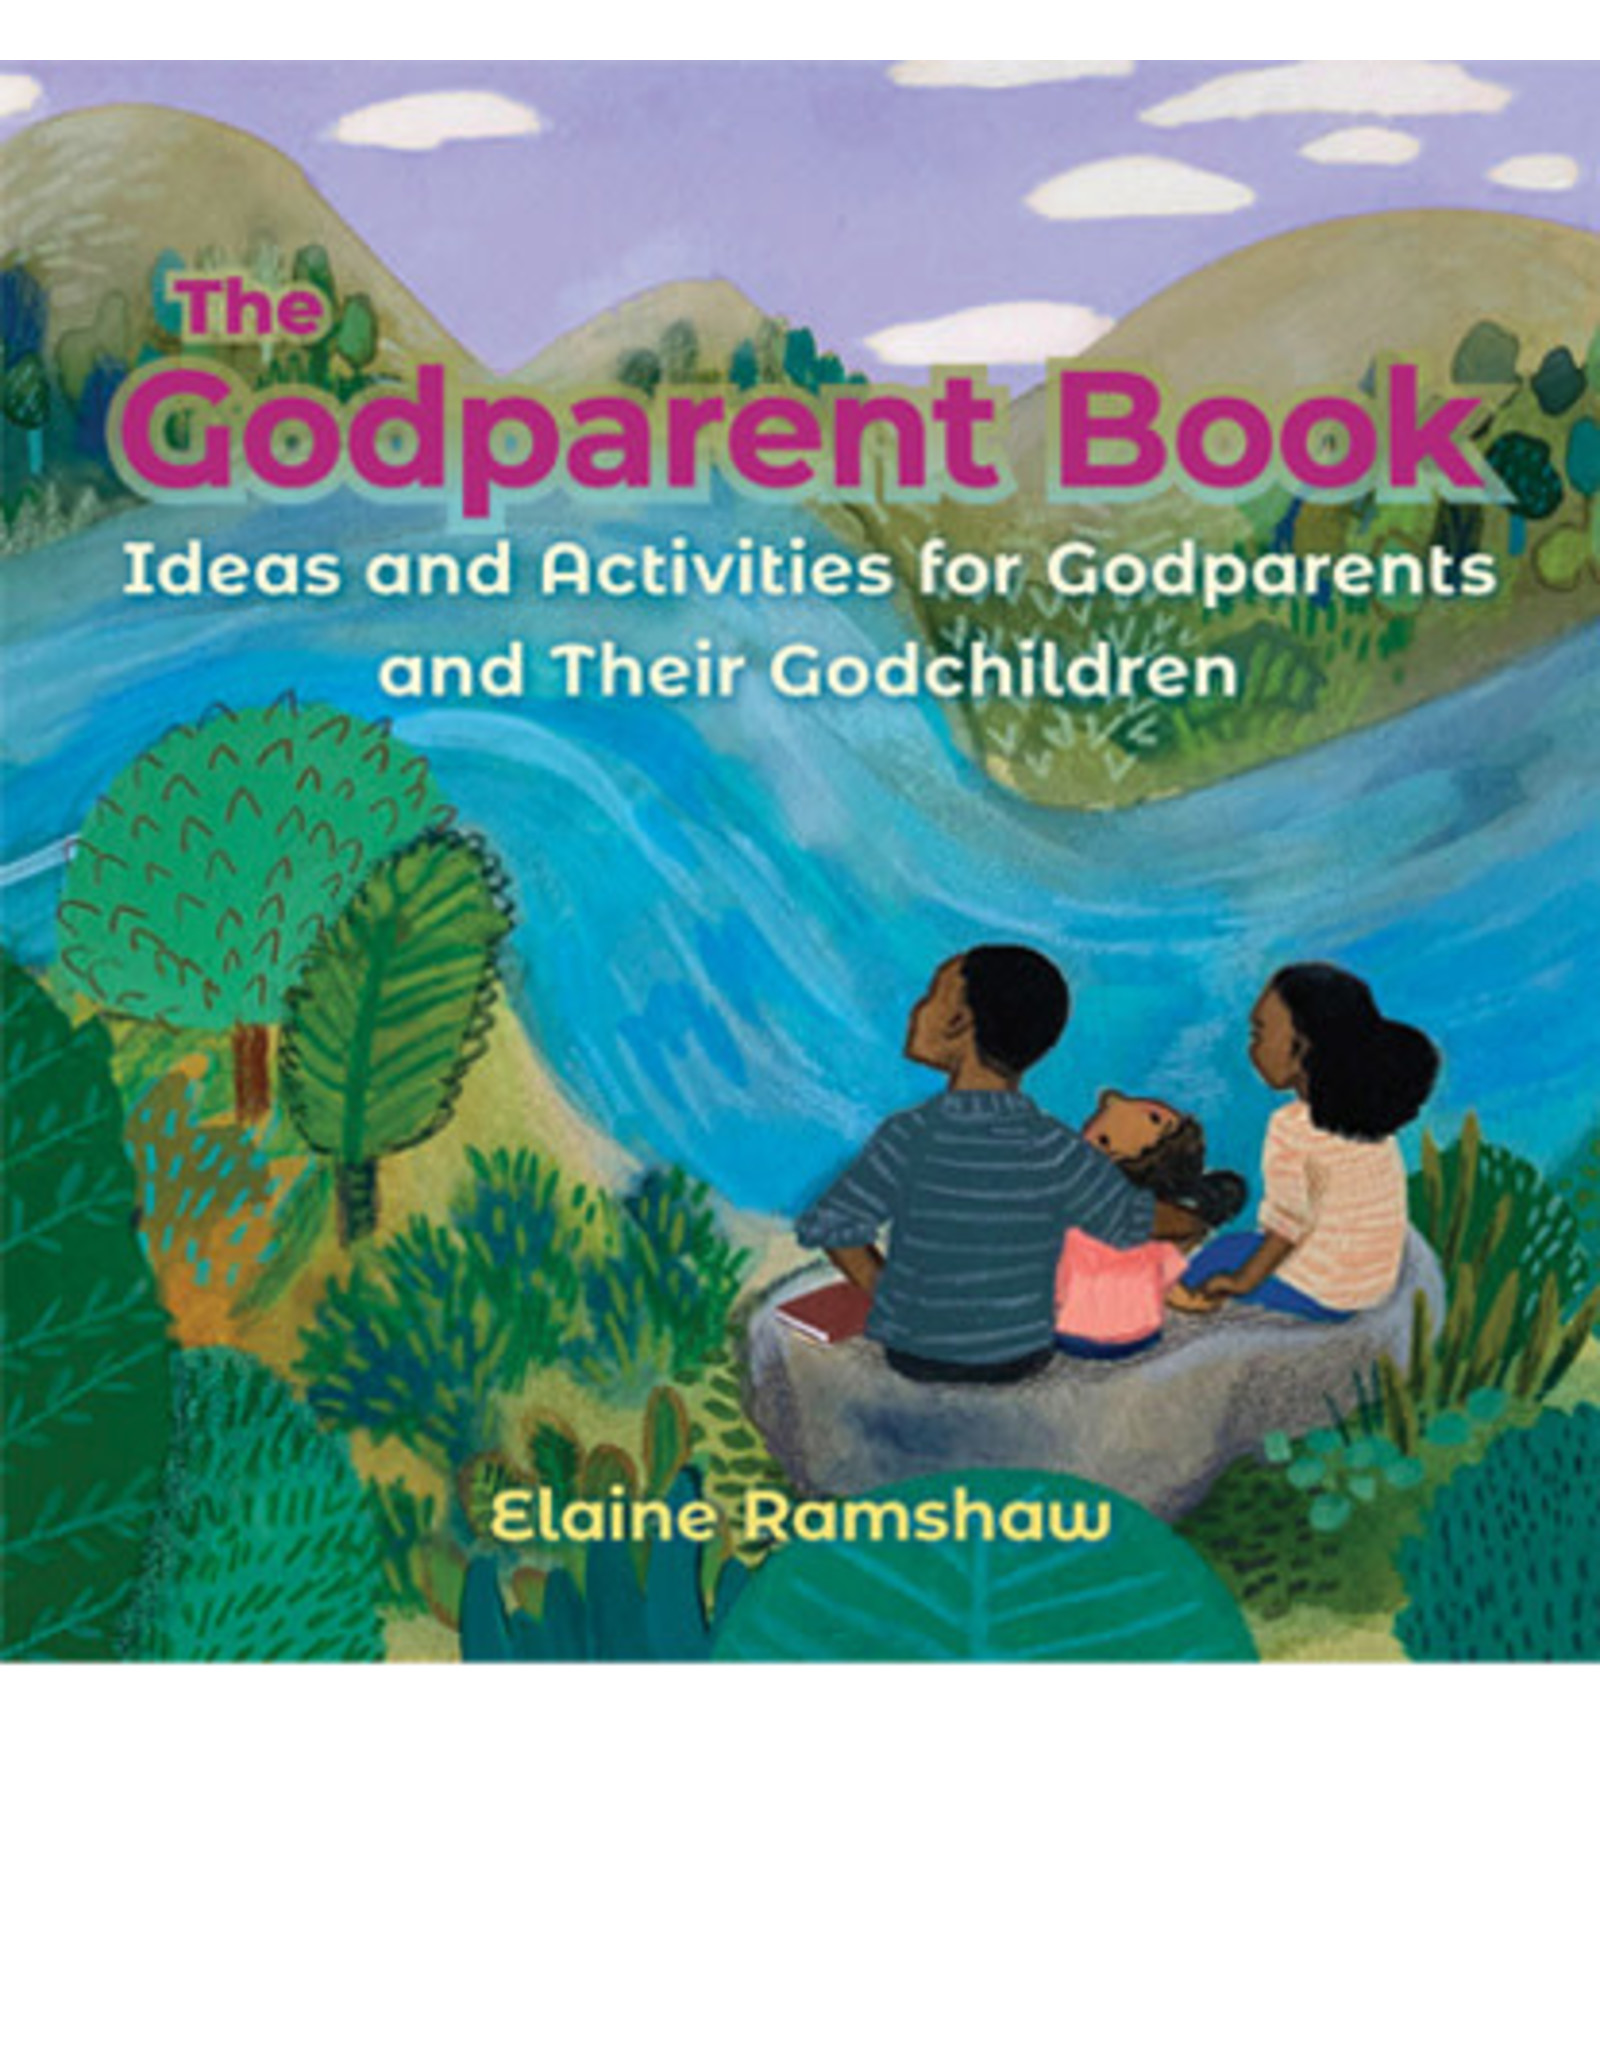 LTP (Liturgy Training Publications) The Godparent Book: Ideas & Activities for Godparents & Their Godchildren